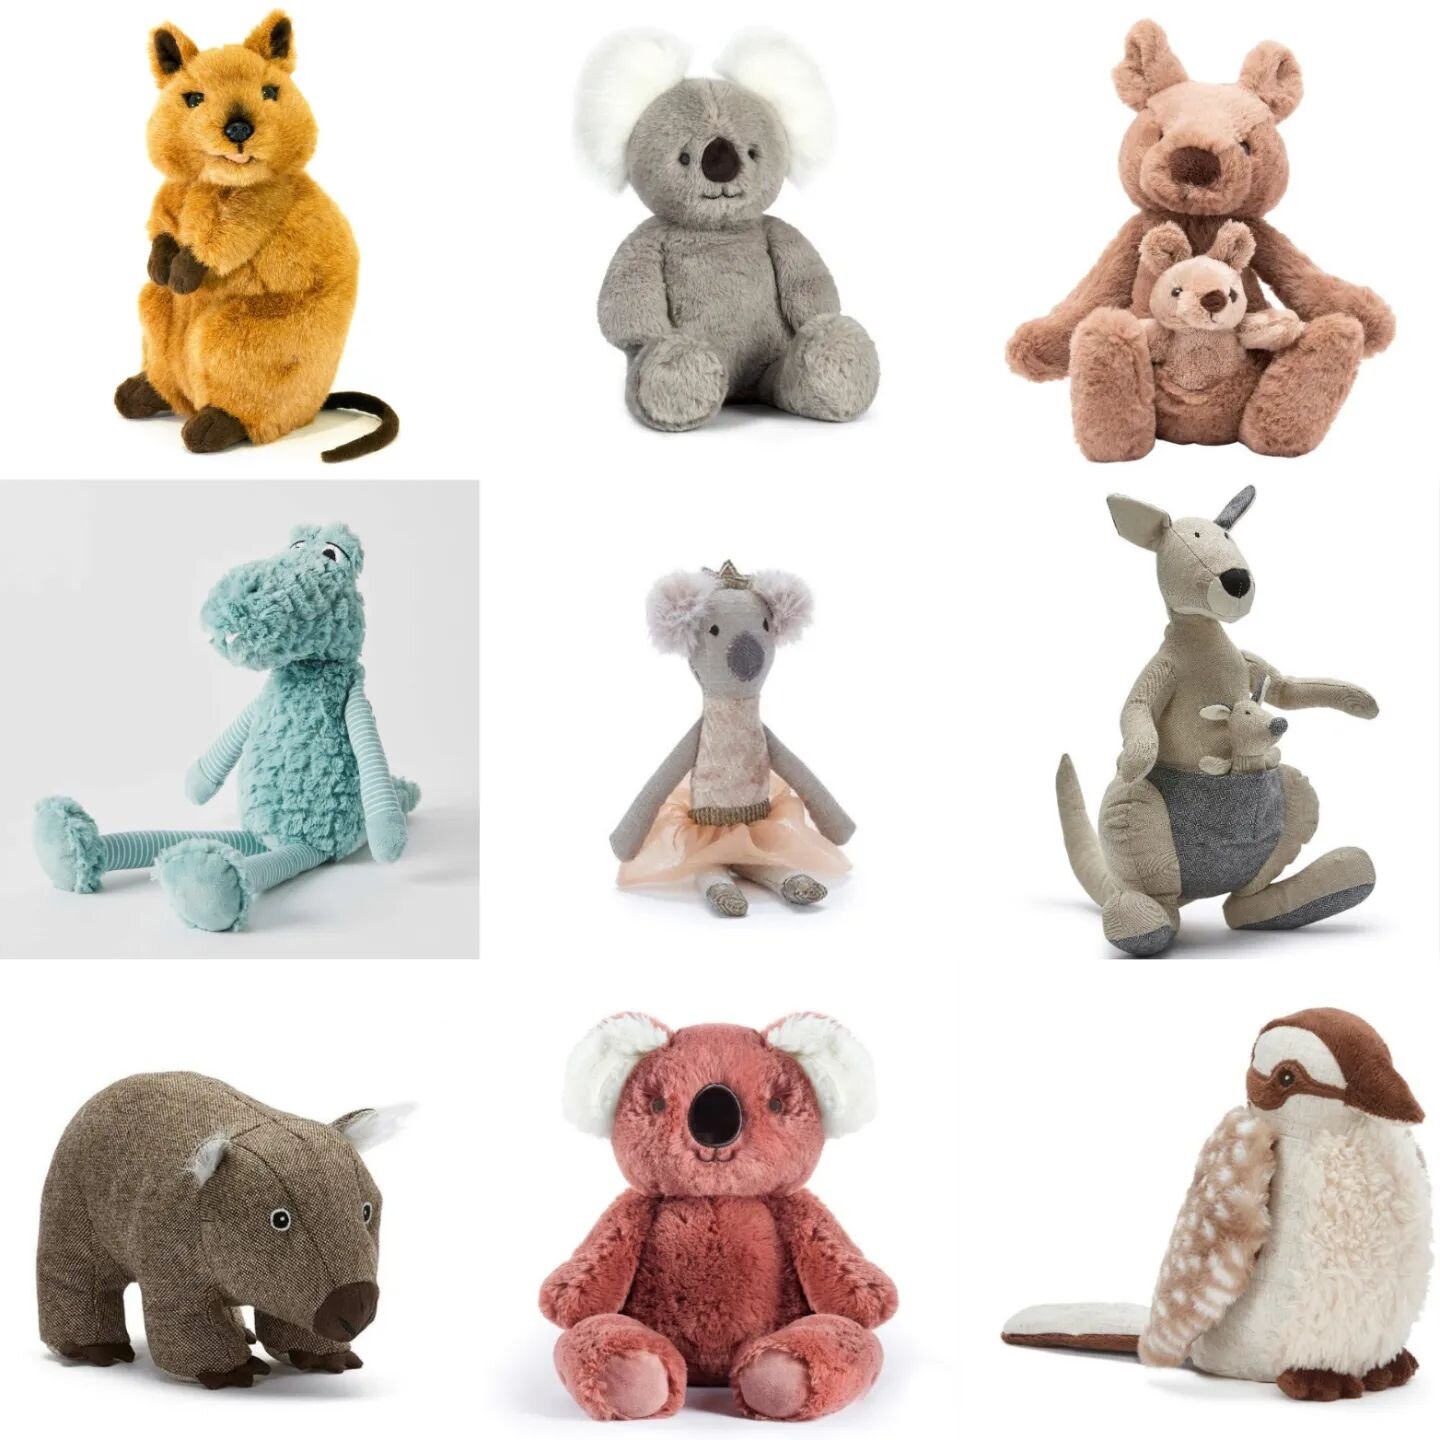 Just some of our enormous range of Australiana plush toys we carry in store from some of our favorite brands

#australiantoys #koalaplush #kangarootoy #kidsplush #kidstoys #australia #kidsstore #kidsboutique #karrinyupshoppingcentre #wombat #kookabur